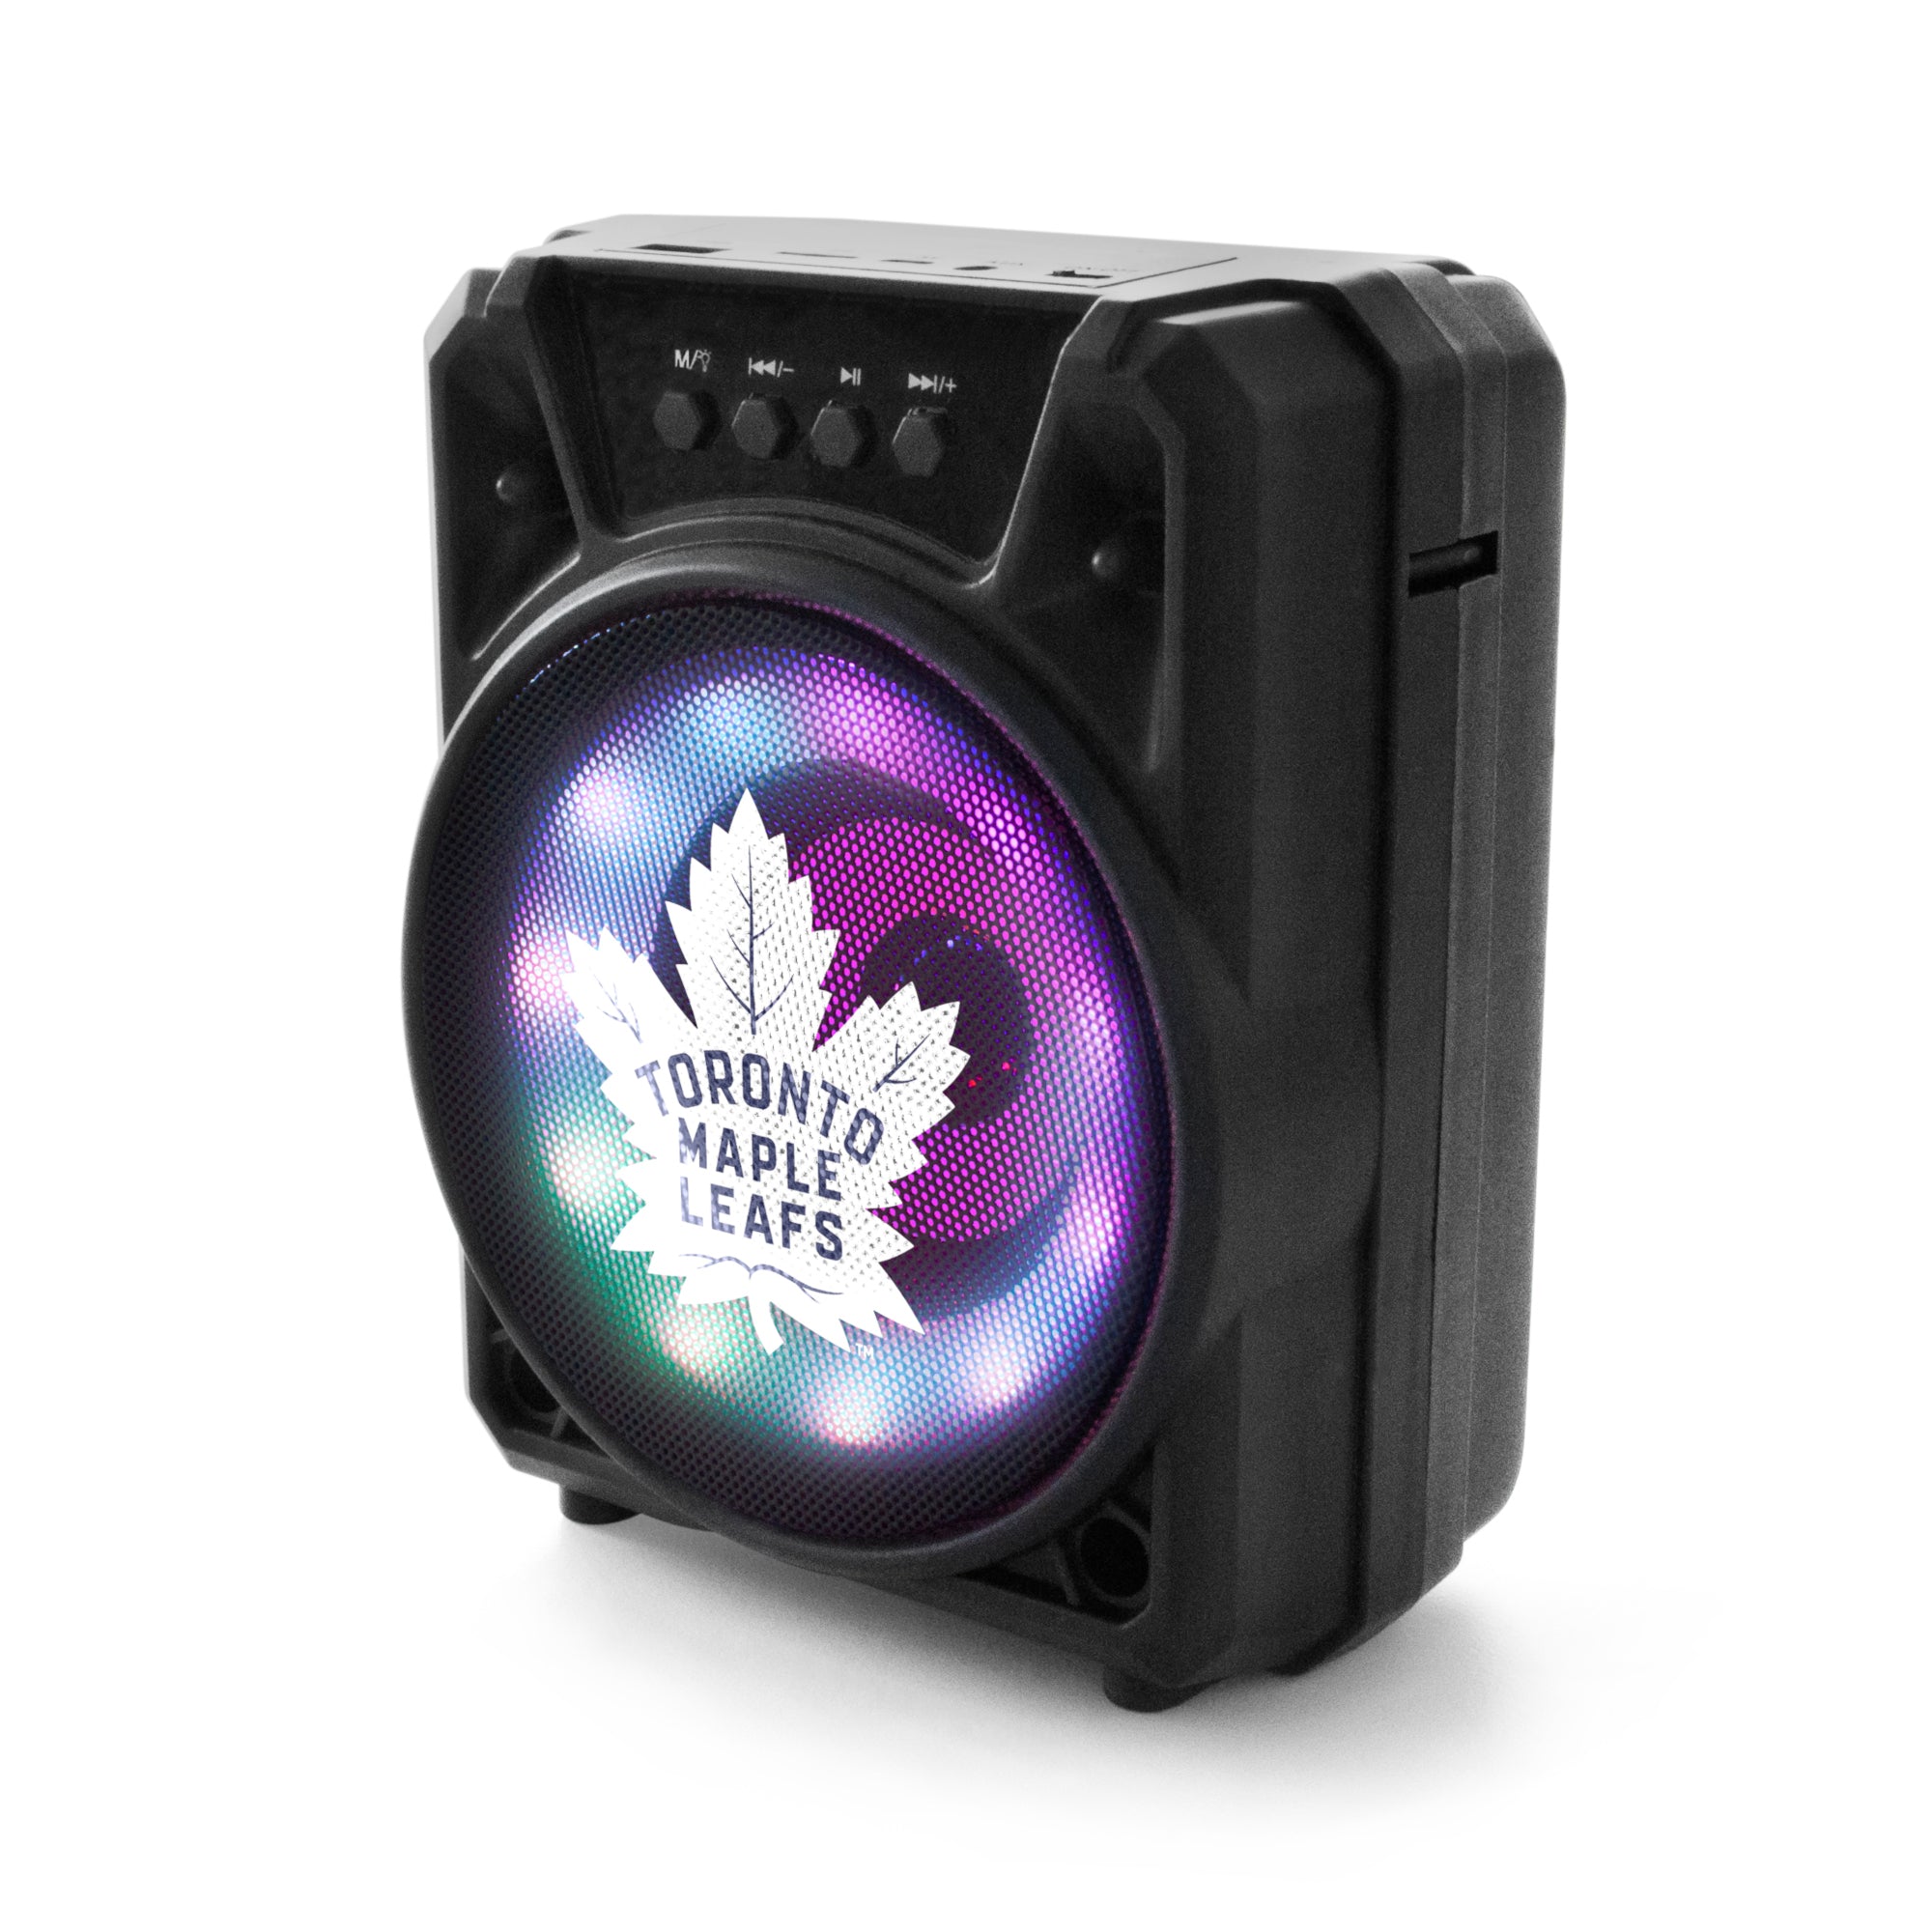 Toronto Maple Leafs End Zone Water Resistant Bluetooth Speaker